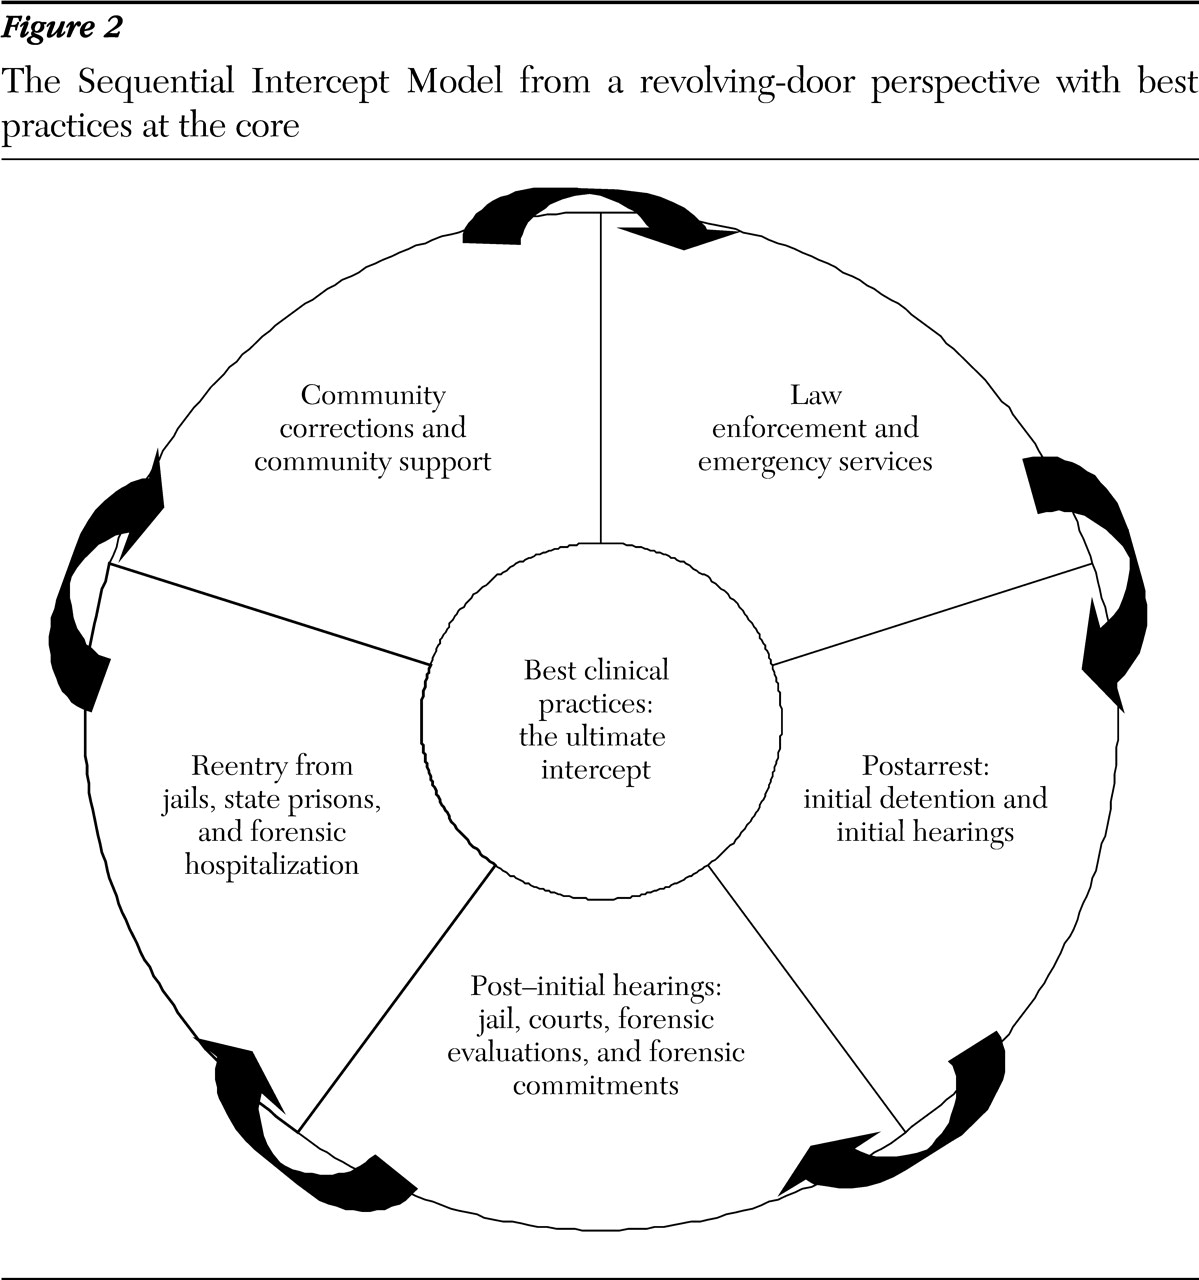 sequential intercept model bexar